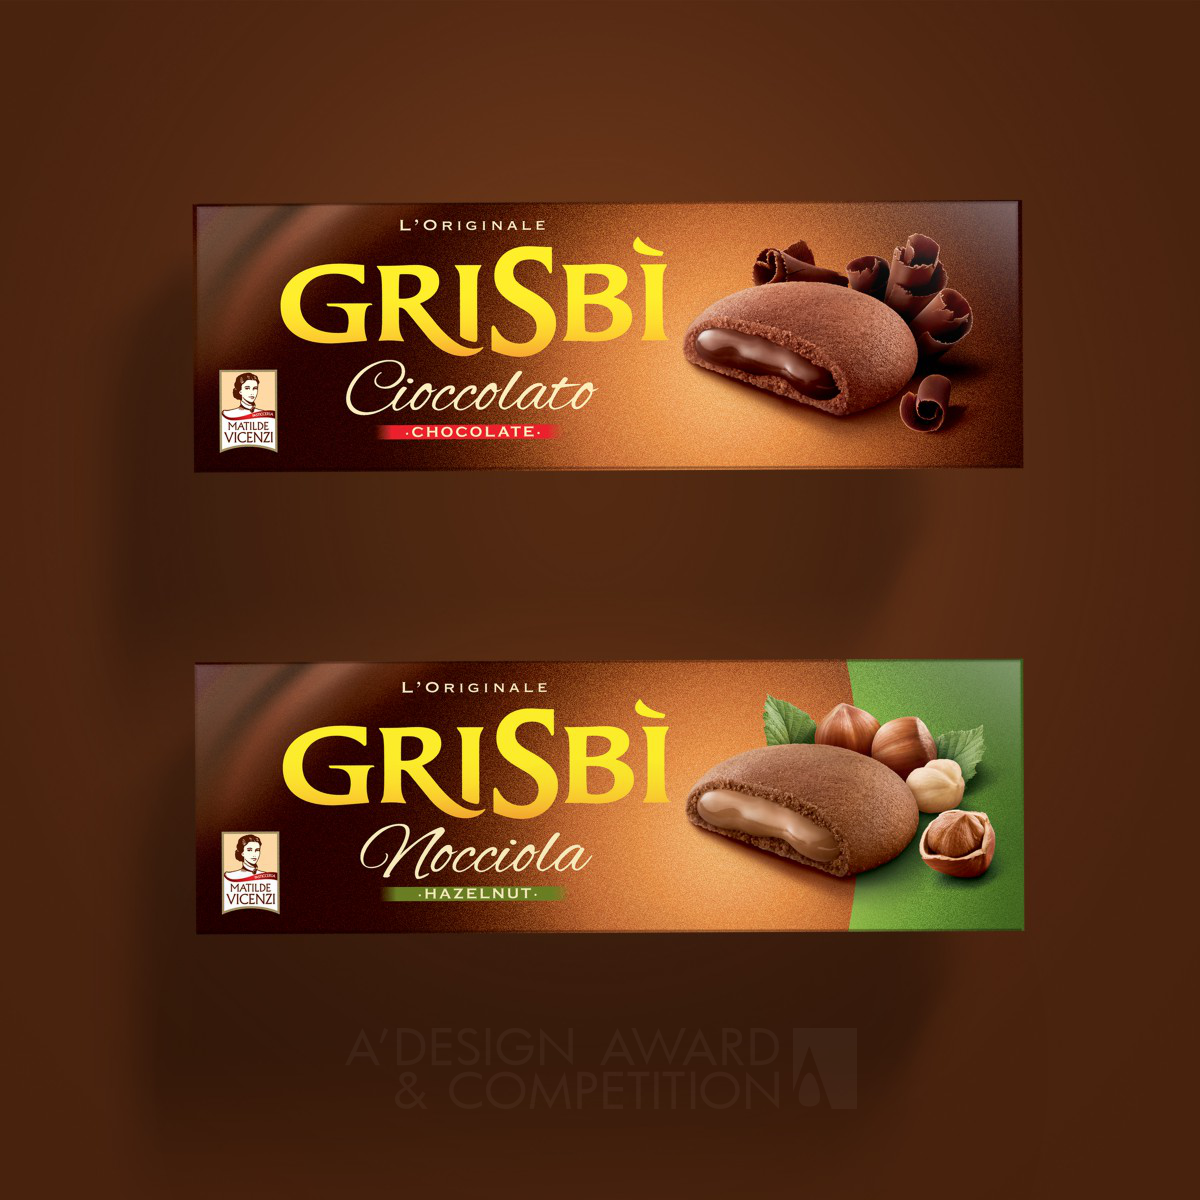 Grisbi Biscuits Brand & Packaging Identity by Cesura Barbara Bronze Packaging Design Award Winner 2018 